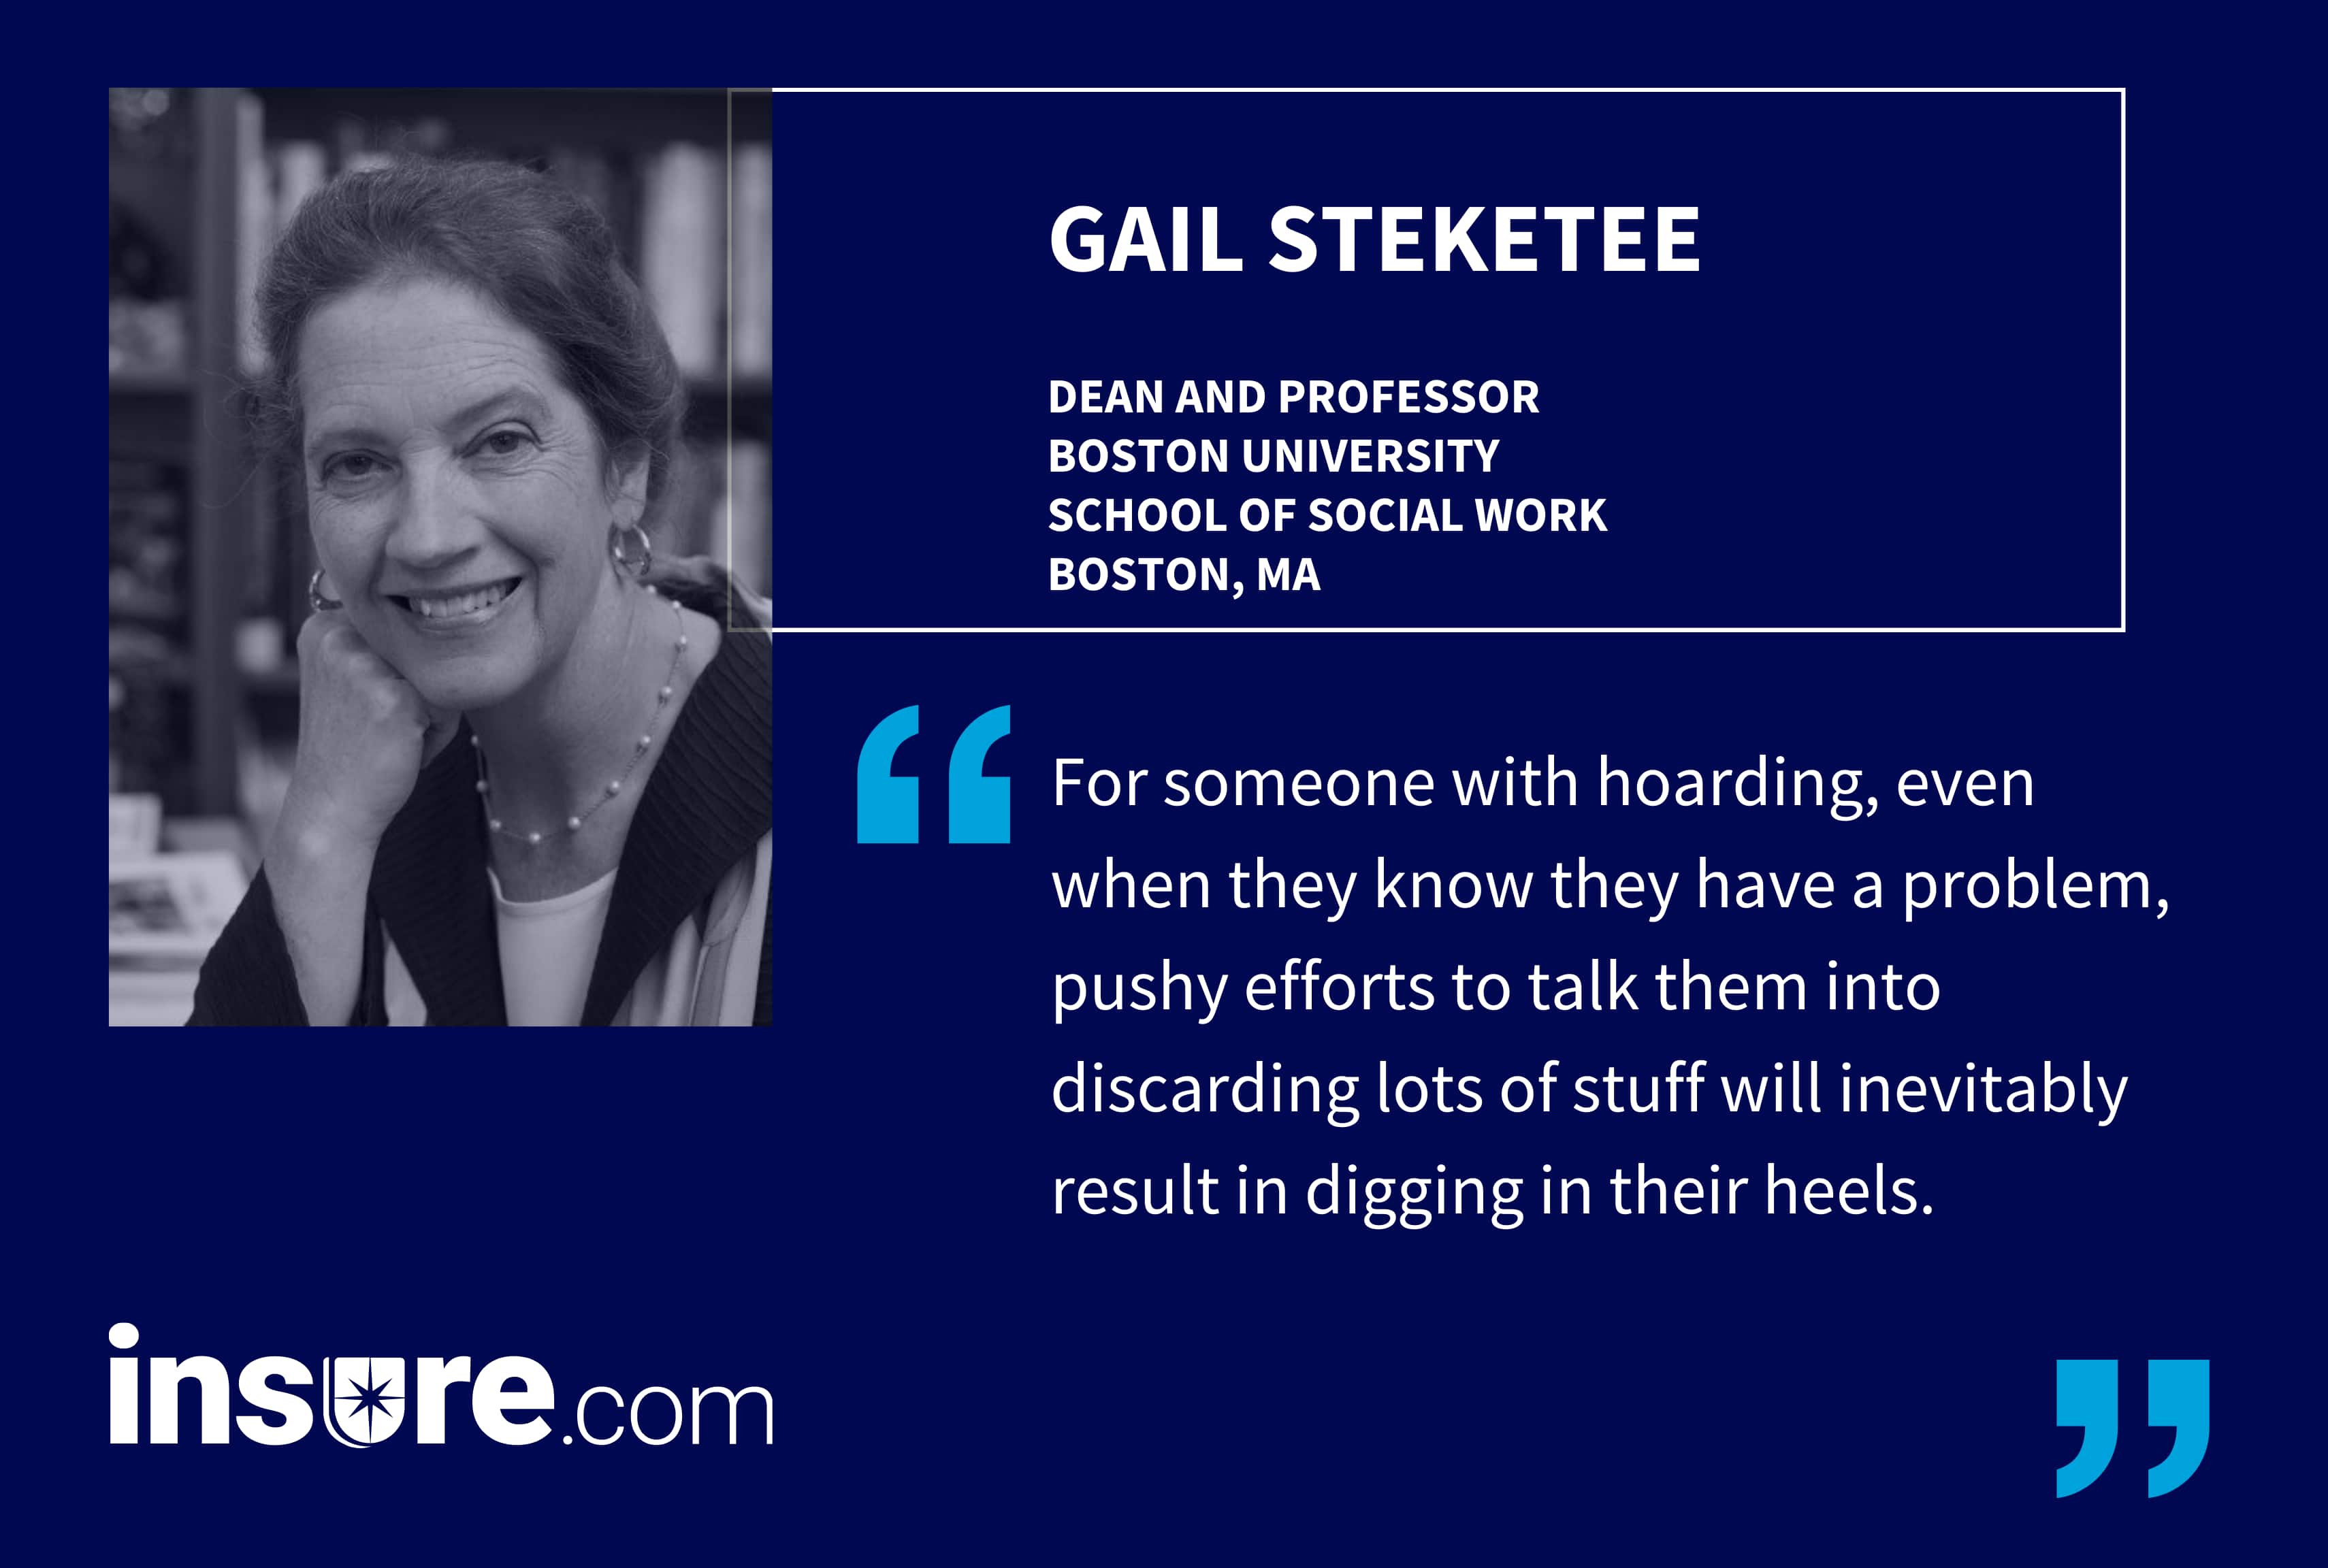 Professor Gail Steketee